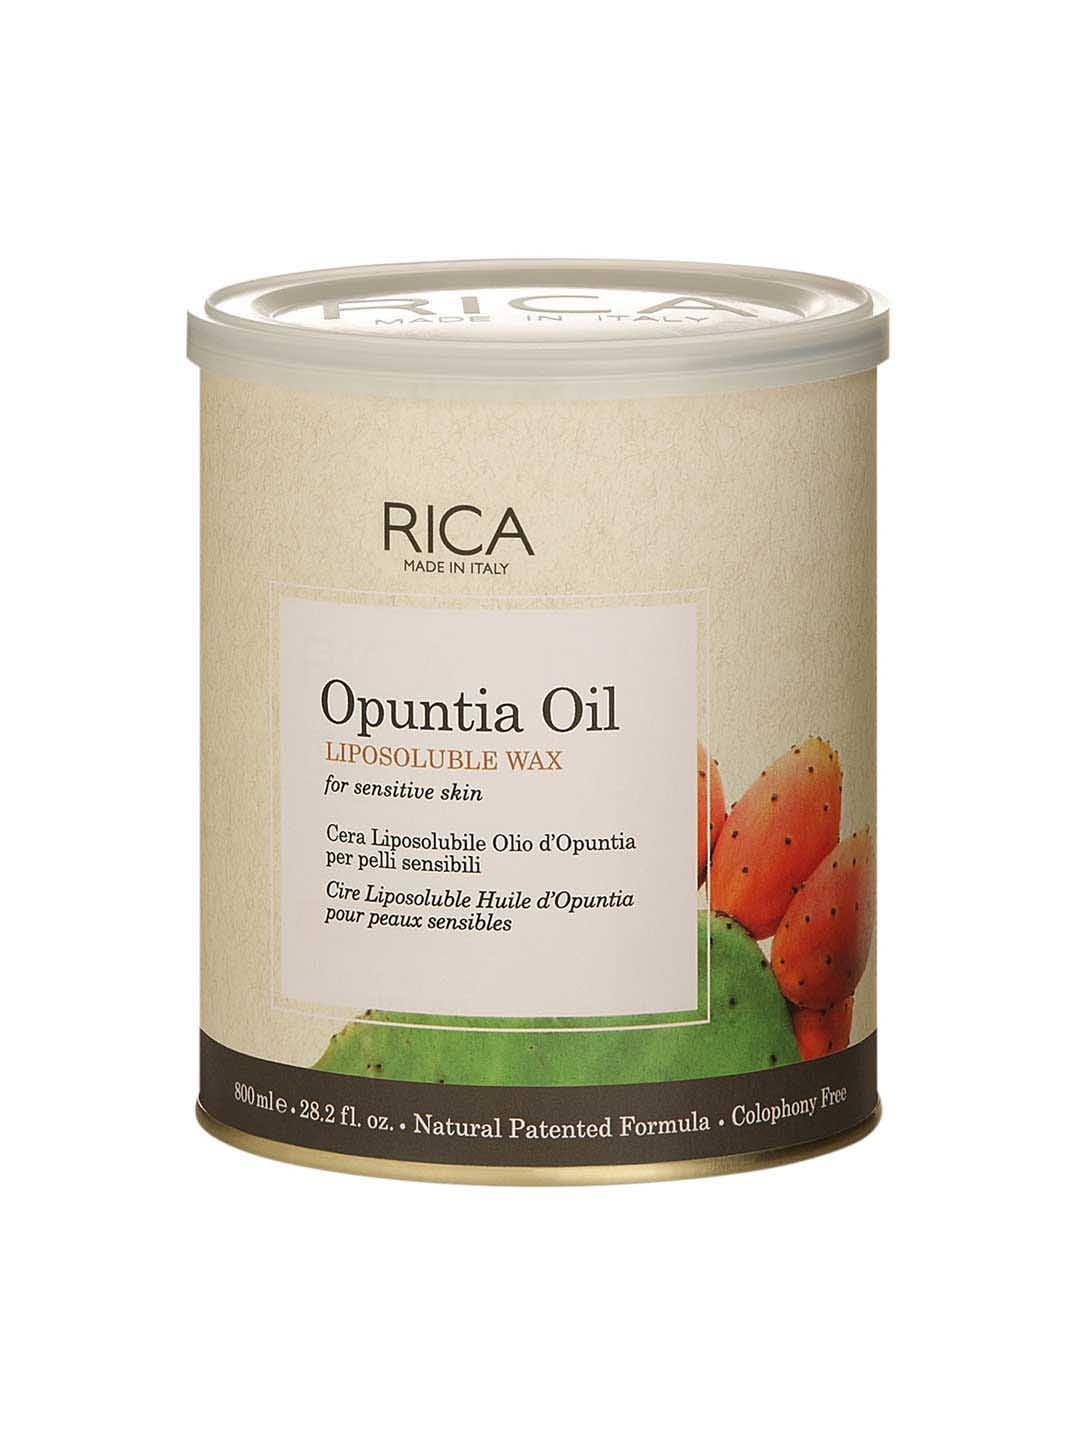 RICA Opuntia Oil Lipsoluble Wax 800 ml